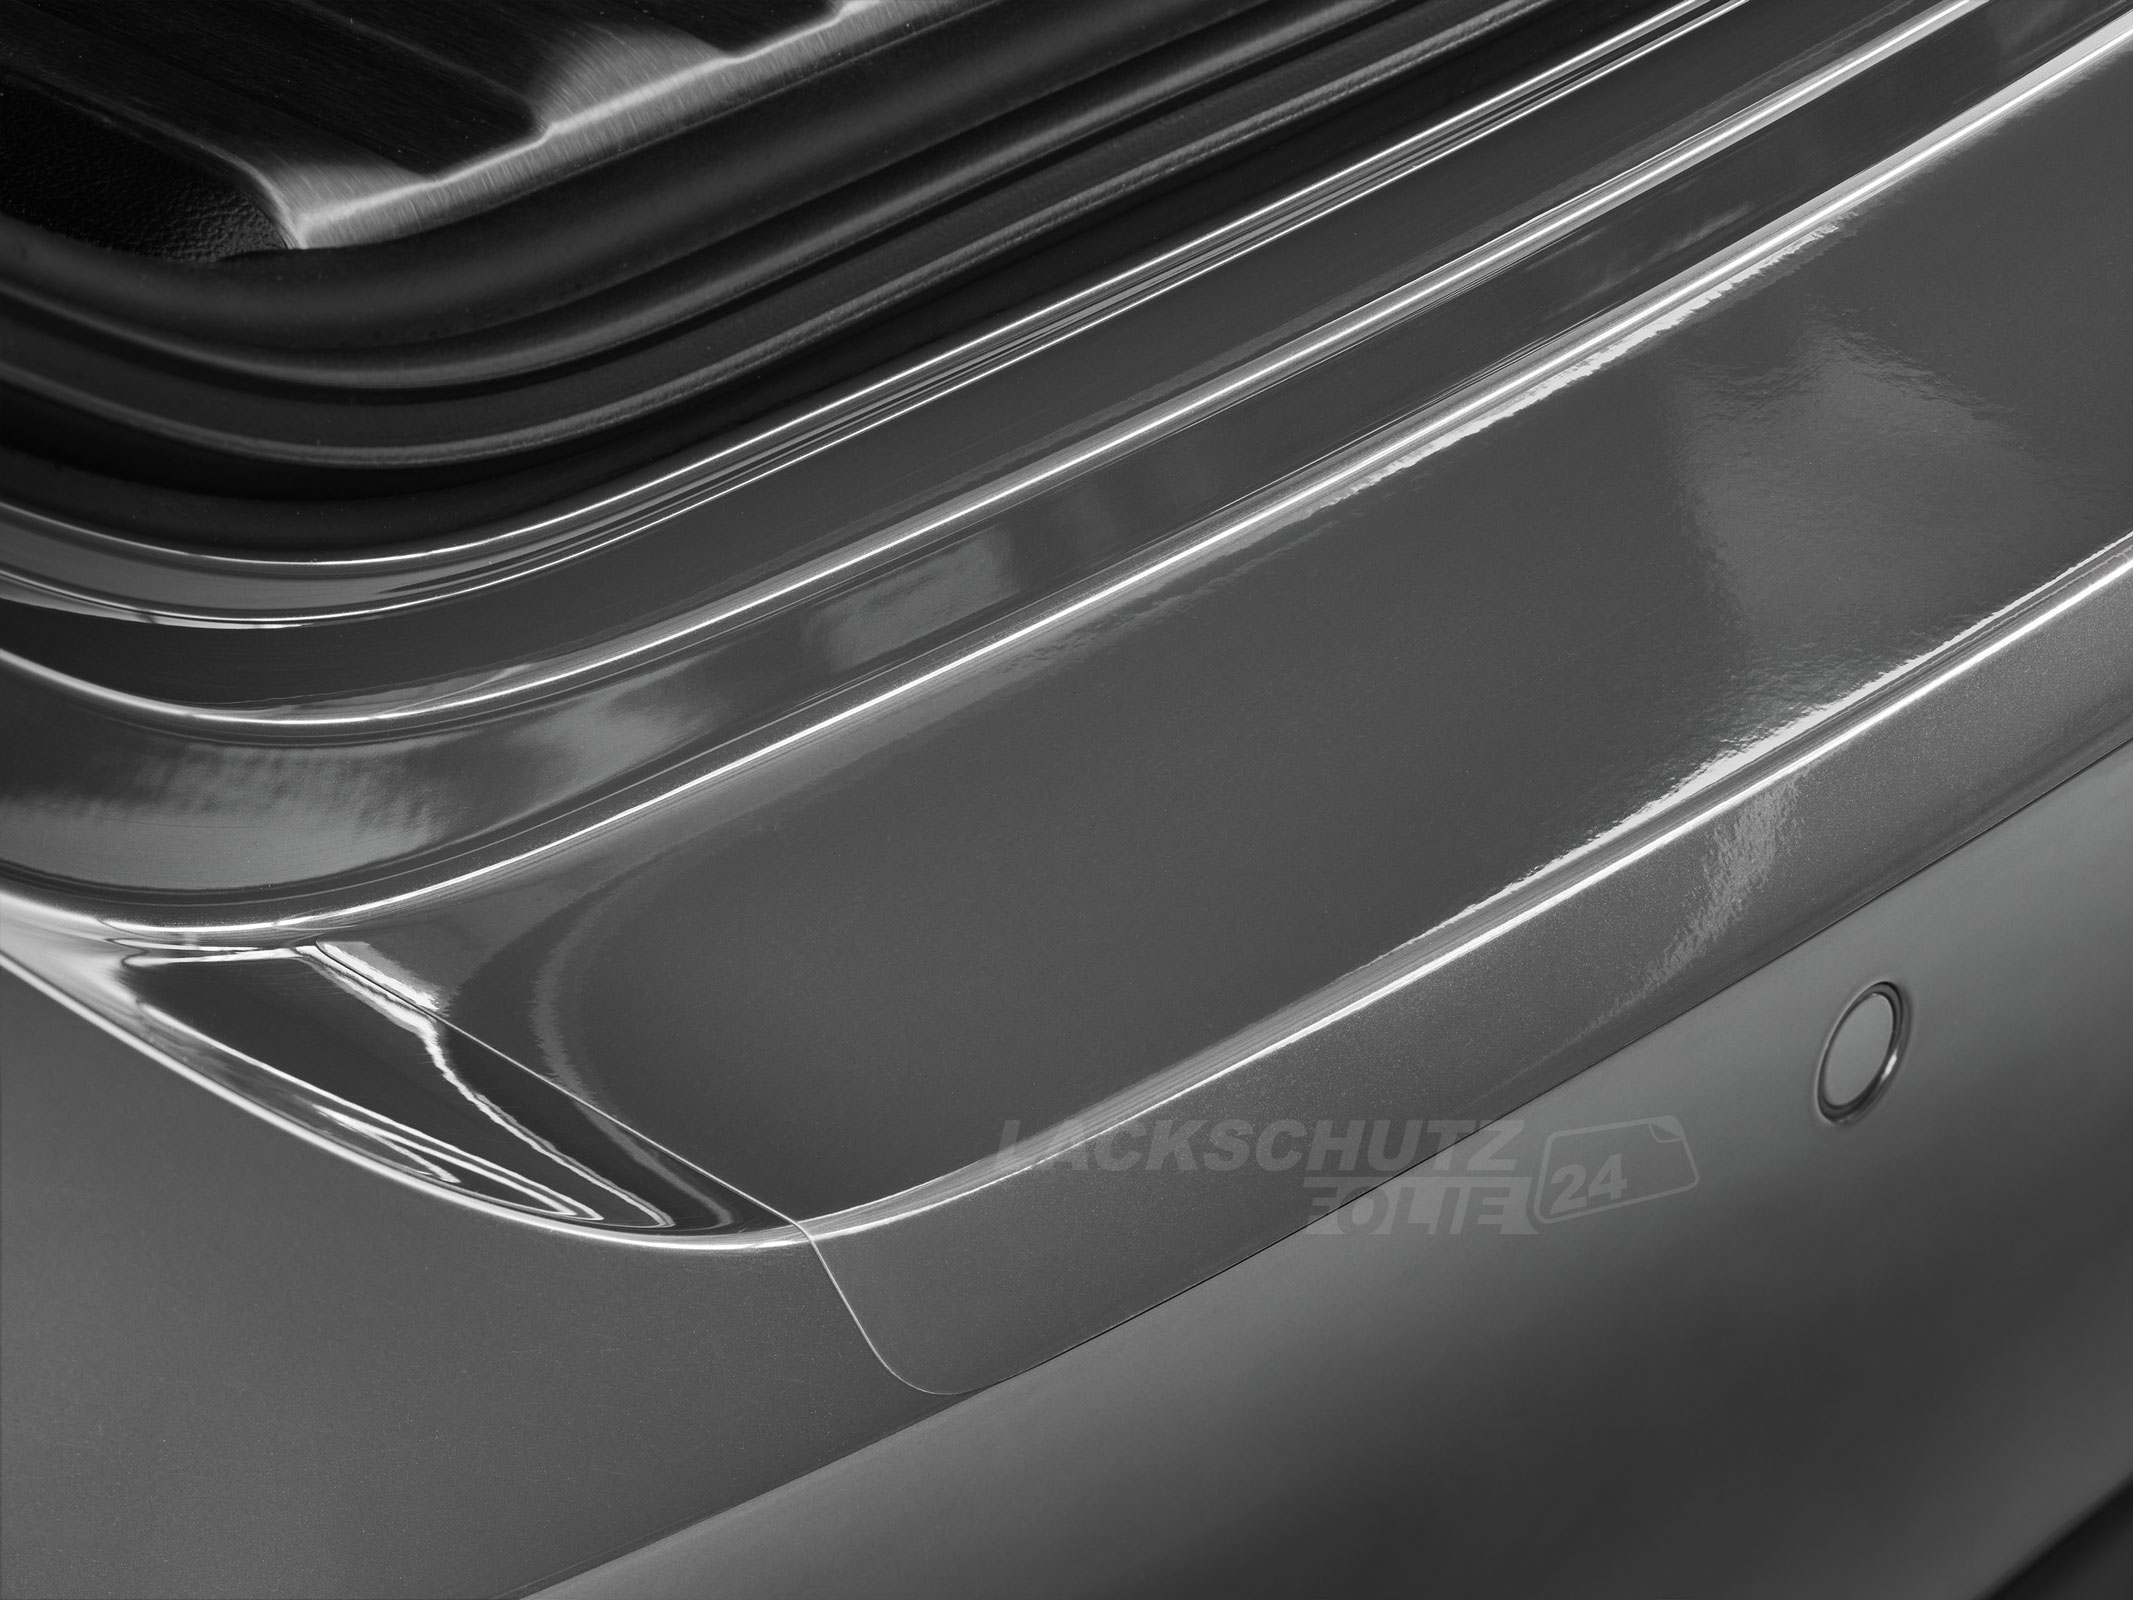 Ladekantenschutzfolie - Transparent Glatt Hochglänzend 150 µm stark für Skoda Octavia Limousine (II) Typ 1Z, BJ 2004-2009